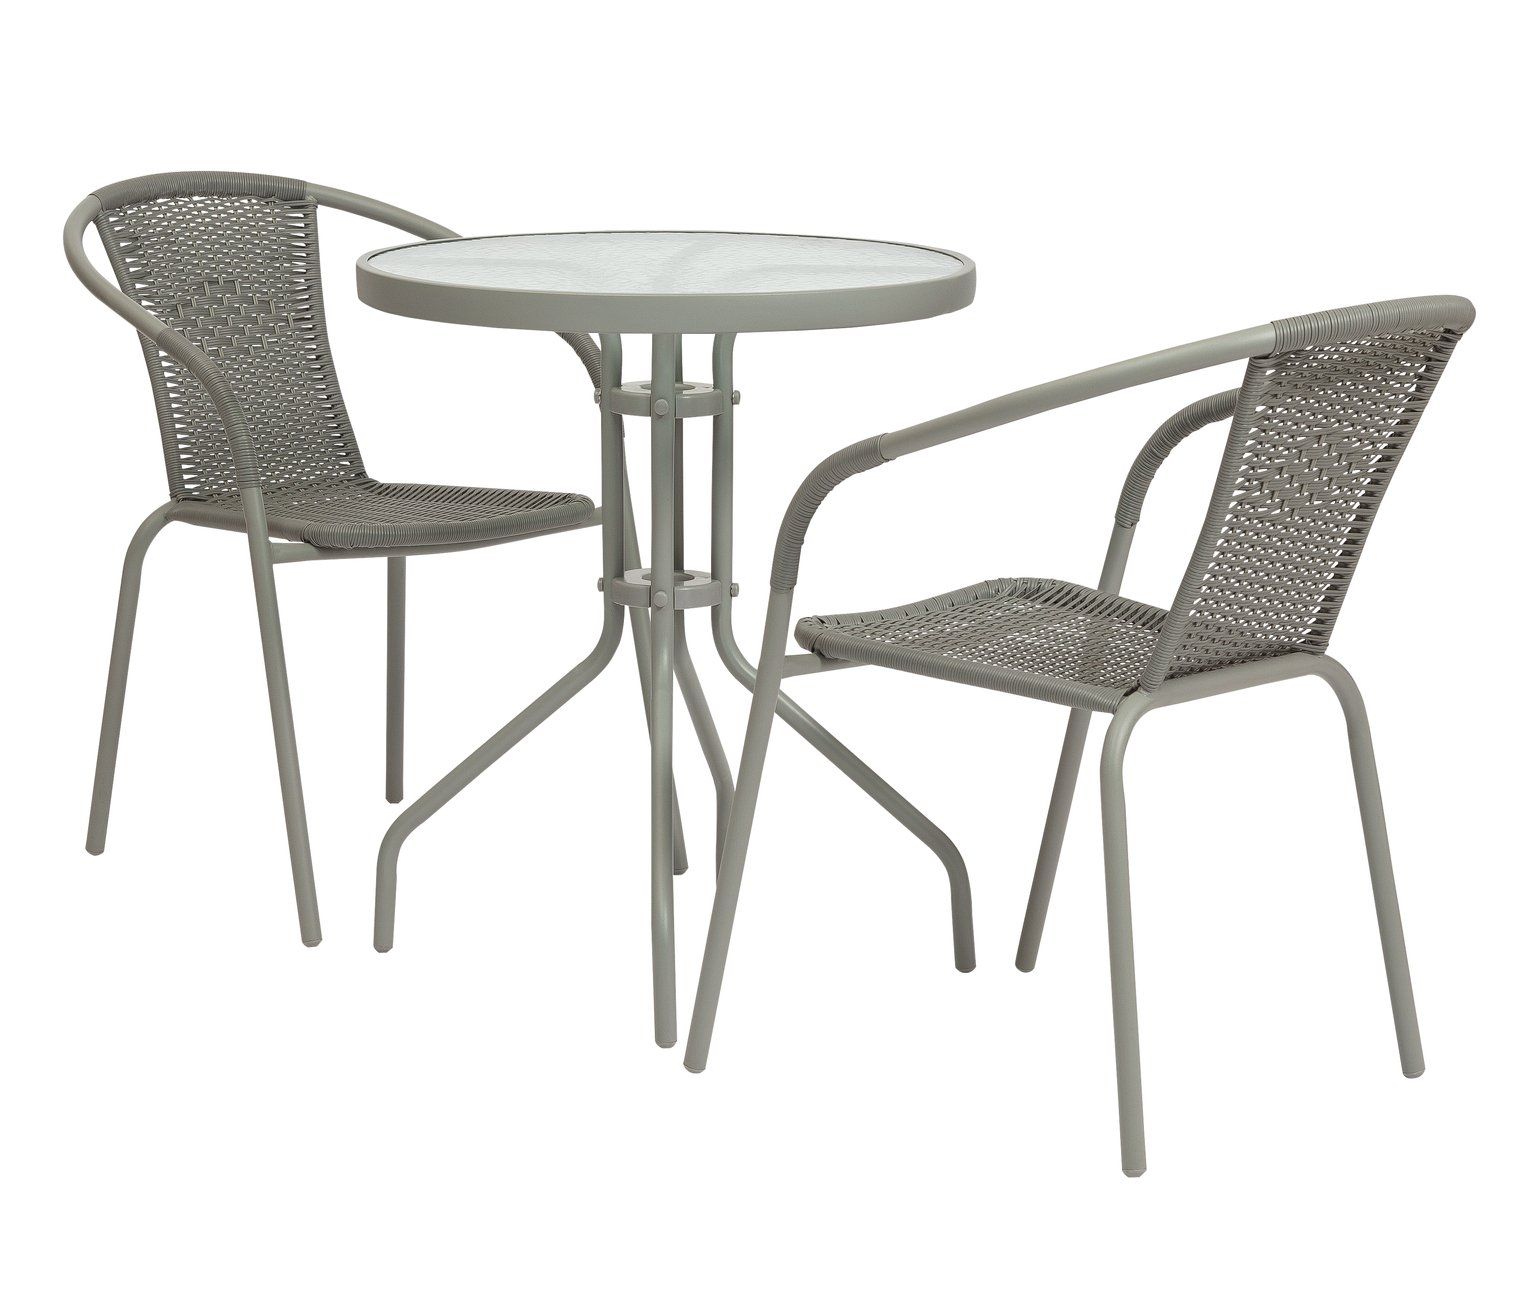 White Plastic Garden Chairs Argos, White Plastic Table And Chairs Garden Argos